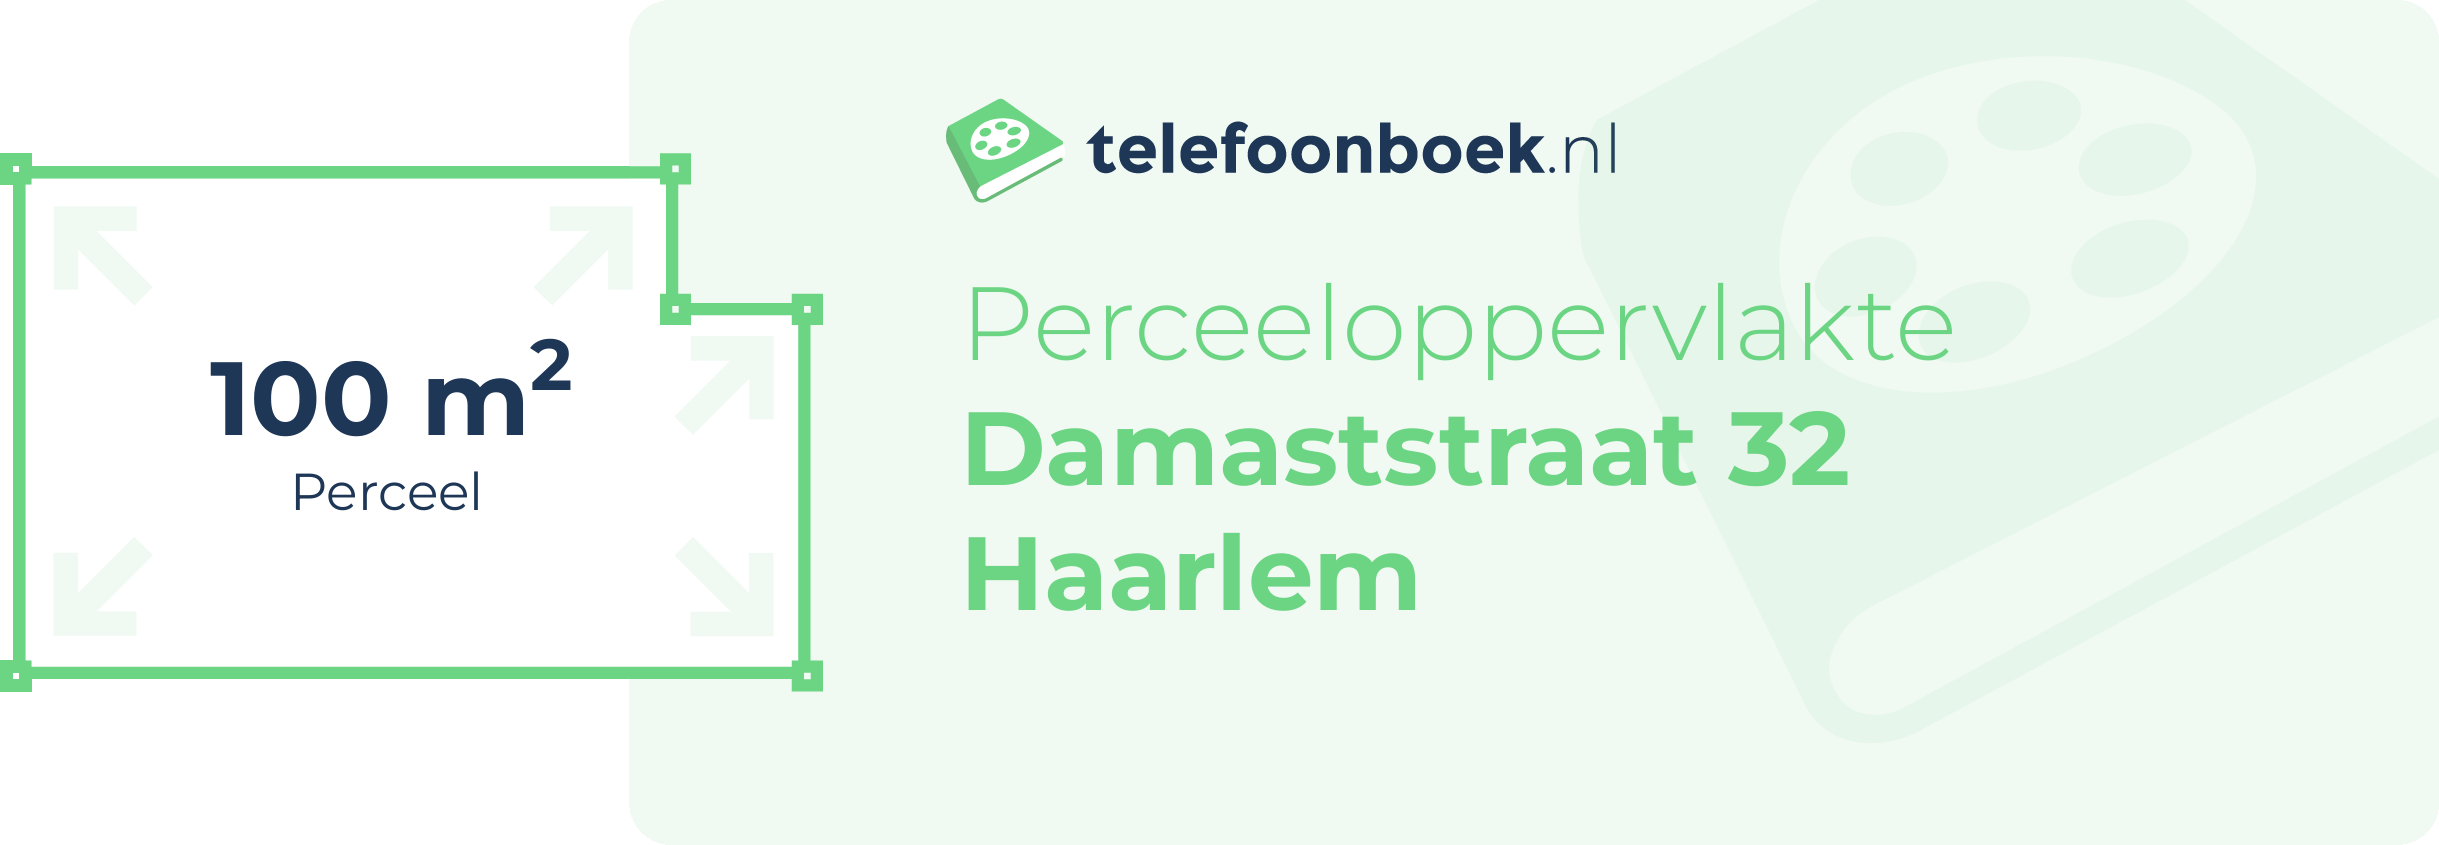 Perceeloppervlakte Damaststraat 32 Haarlem